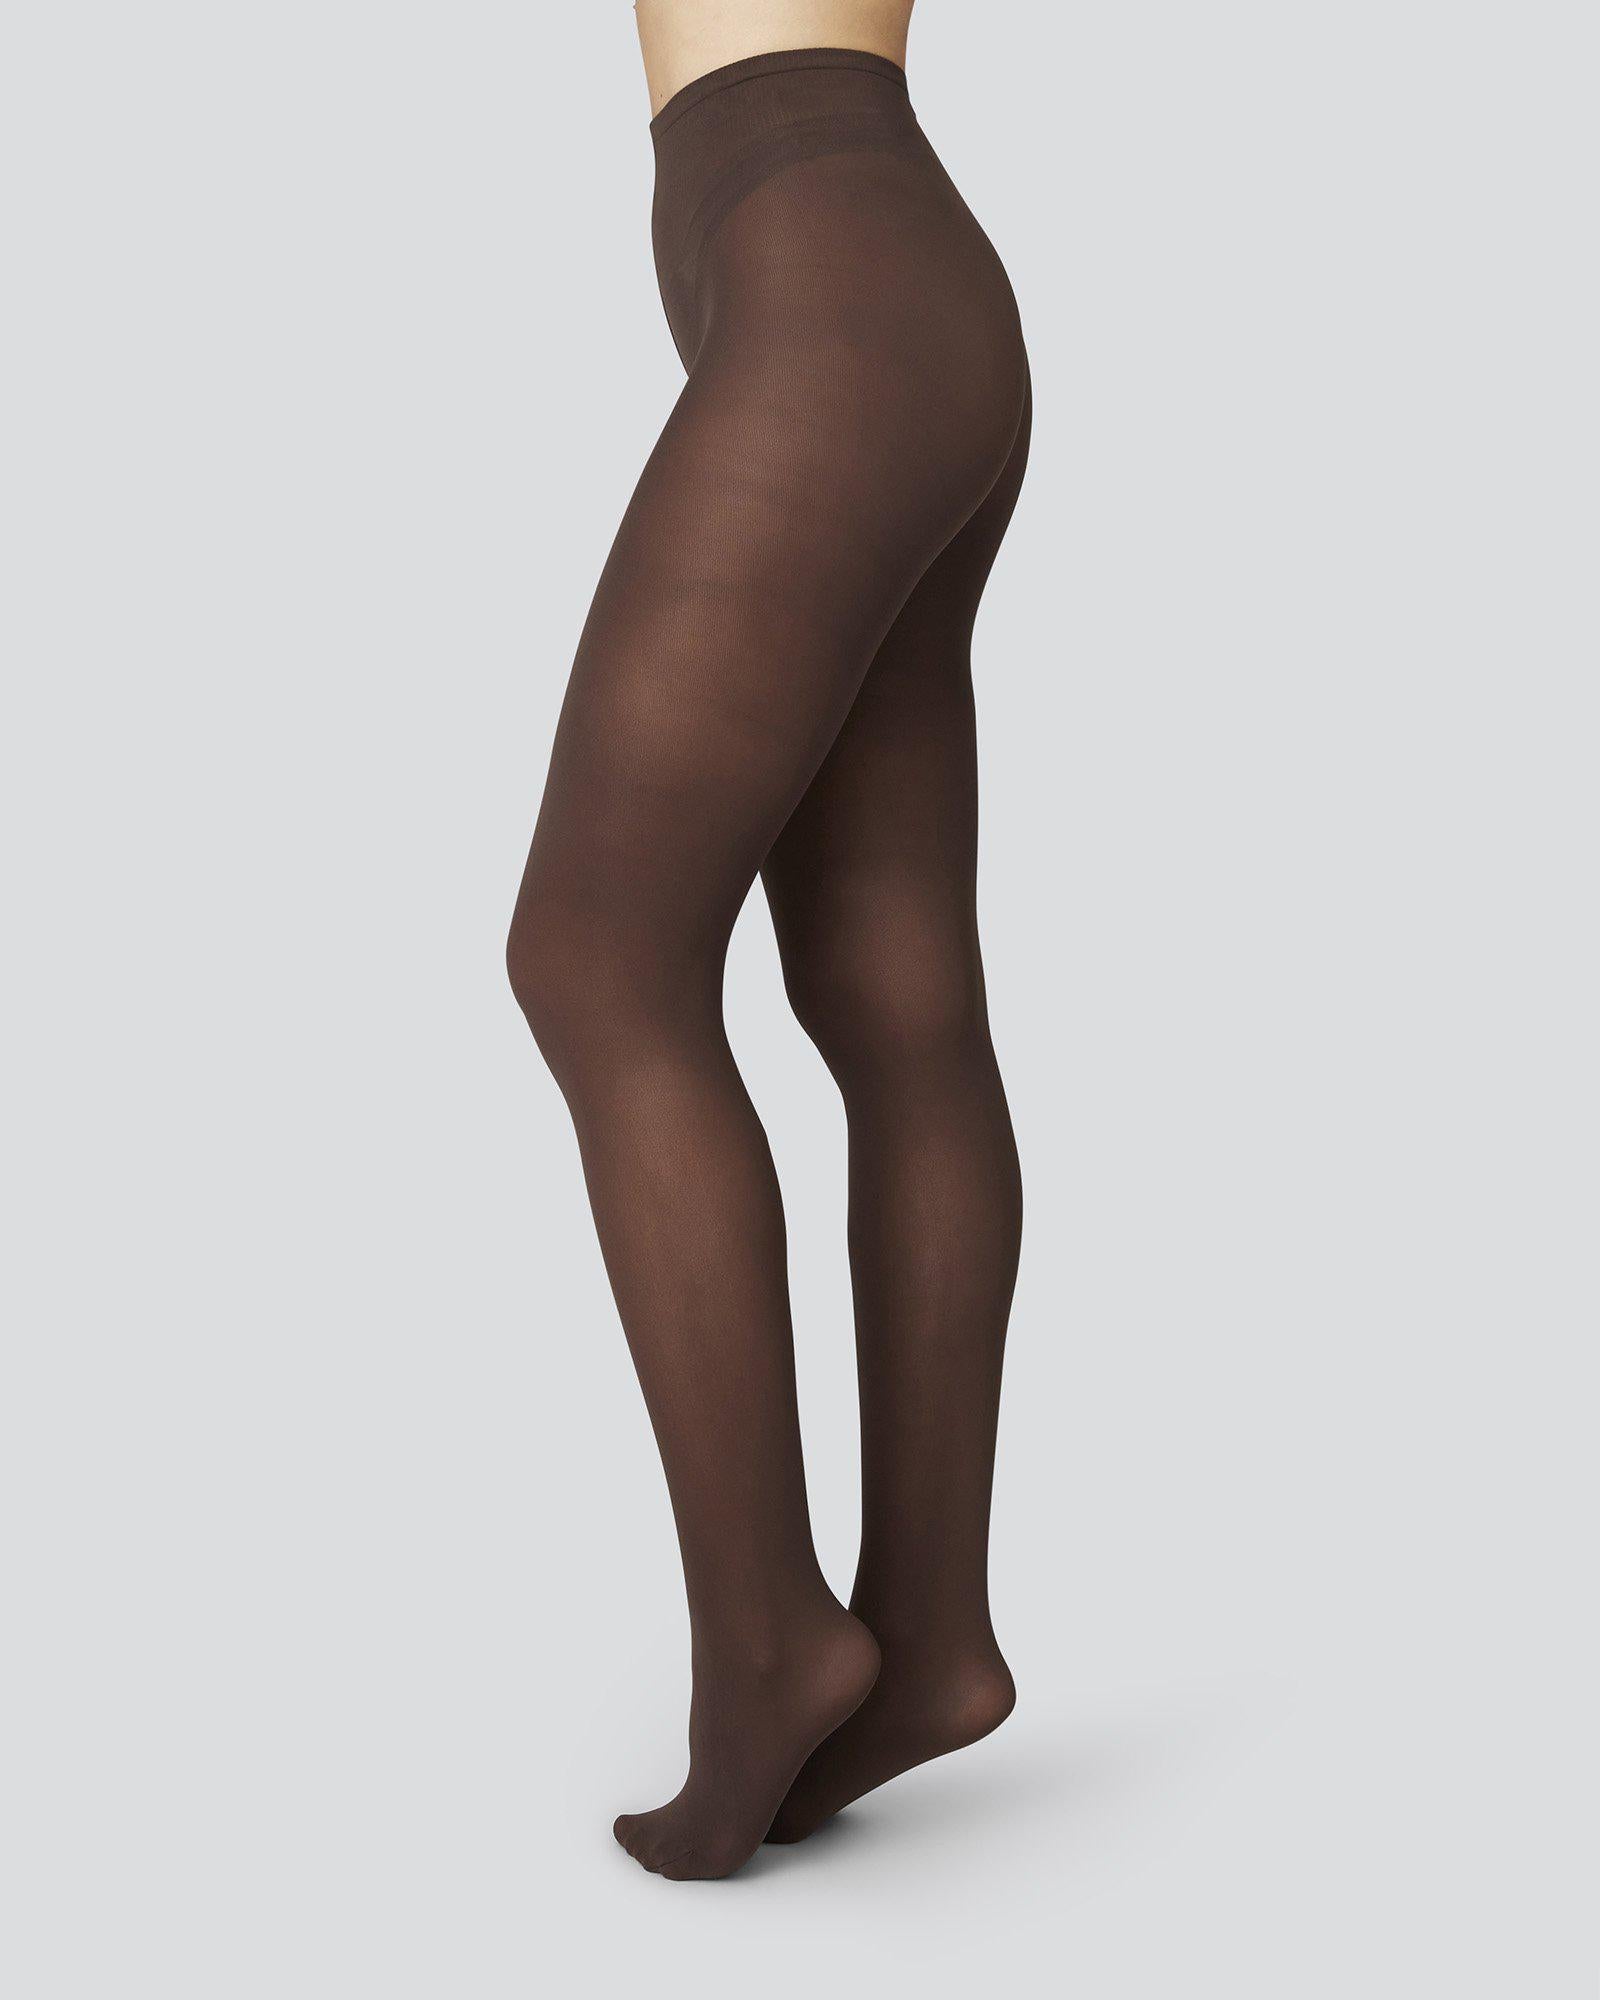 Olivia Premium Tights Dark Brown 60 den | Shop now - Swedish Stockings